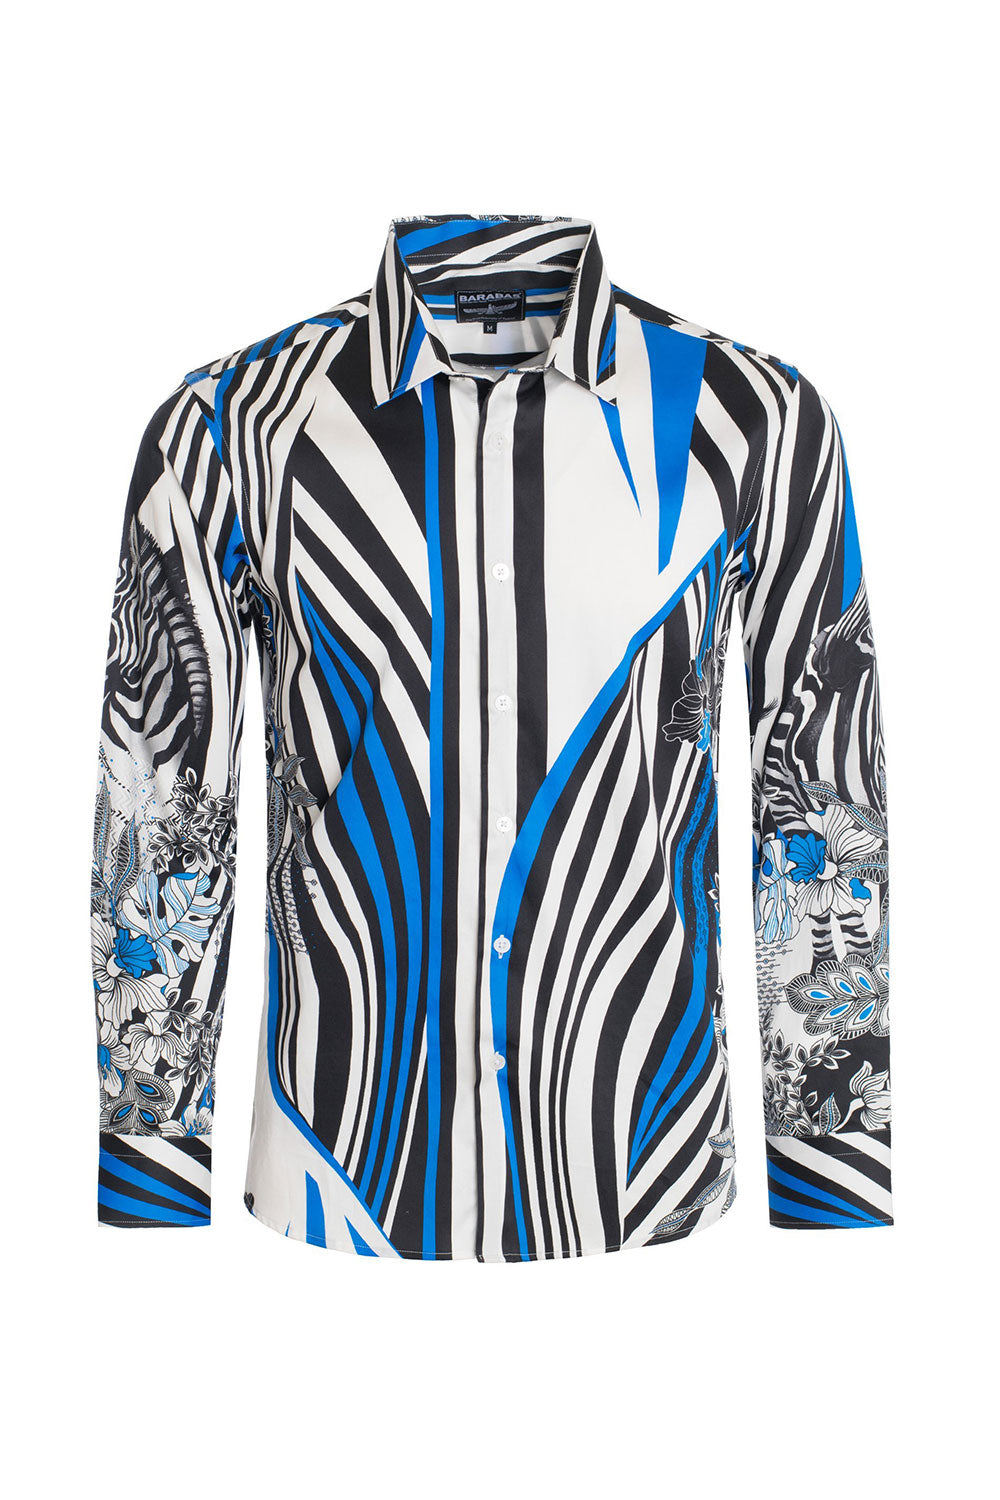 BARABAS Men's Floral Zebra Printed Multi Color Button Shirts SP206